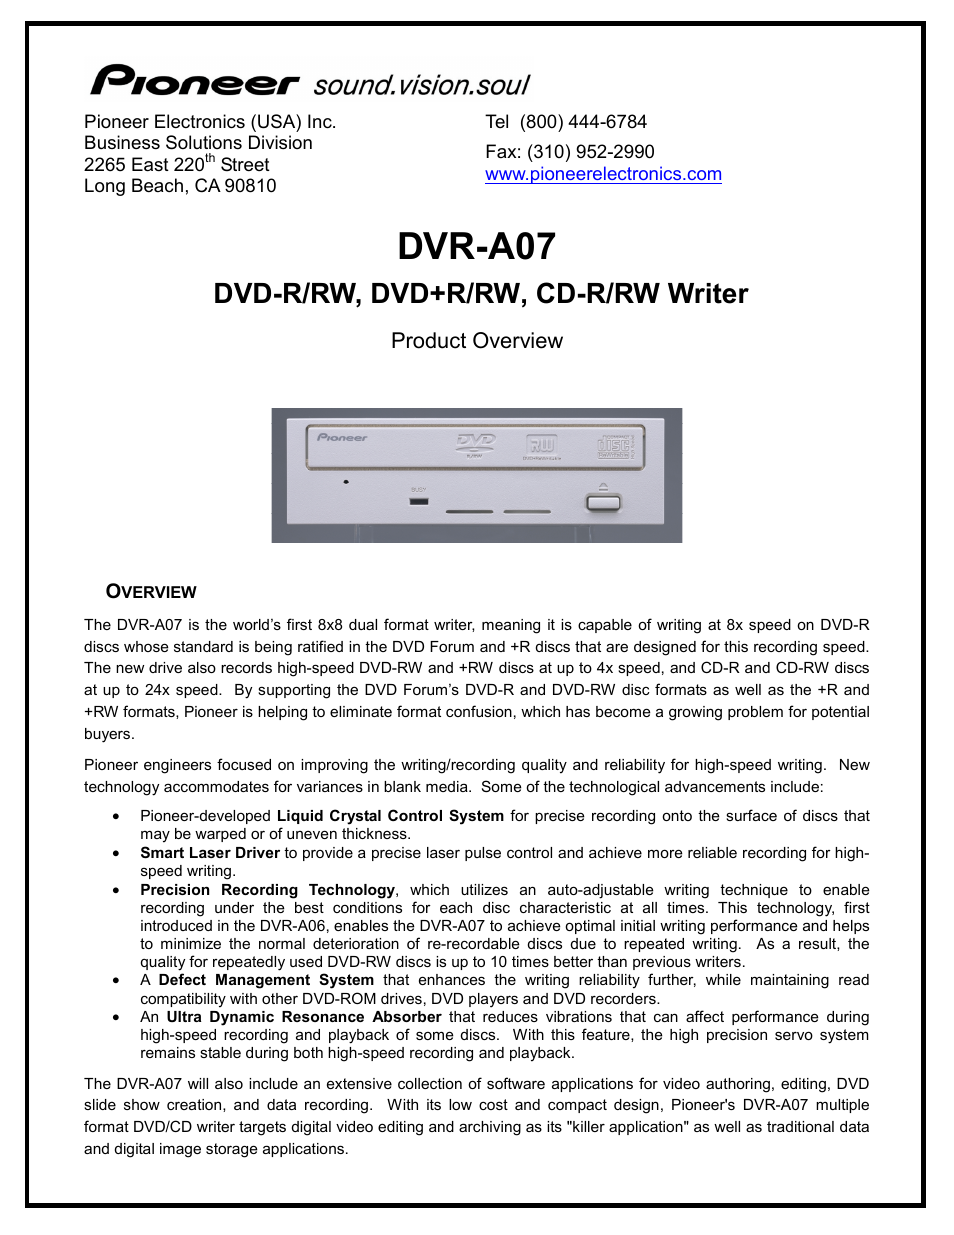 DVR-A07